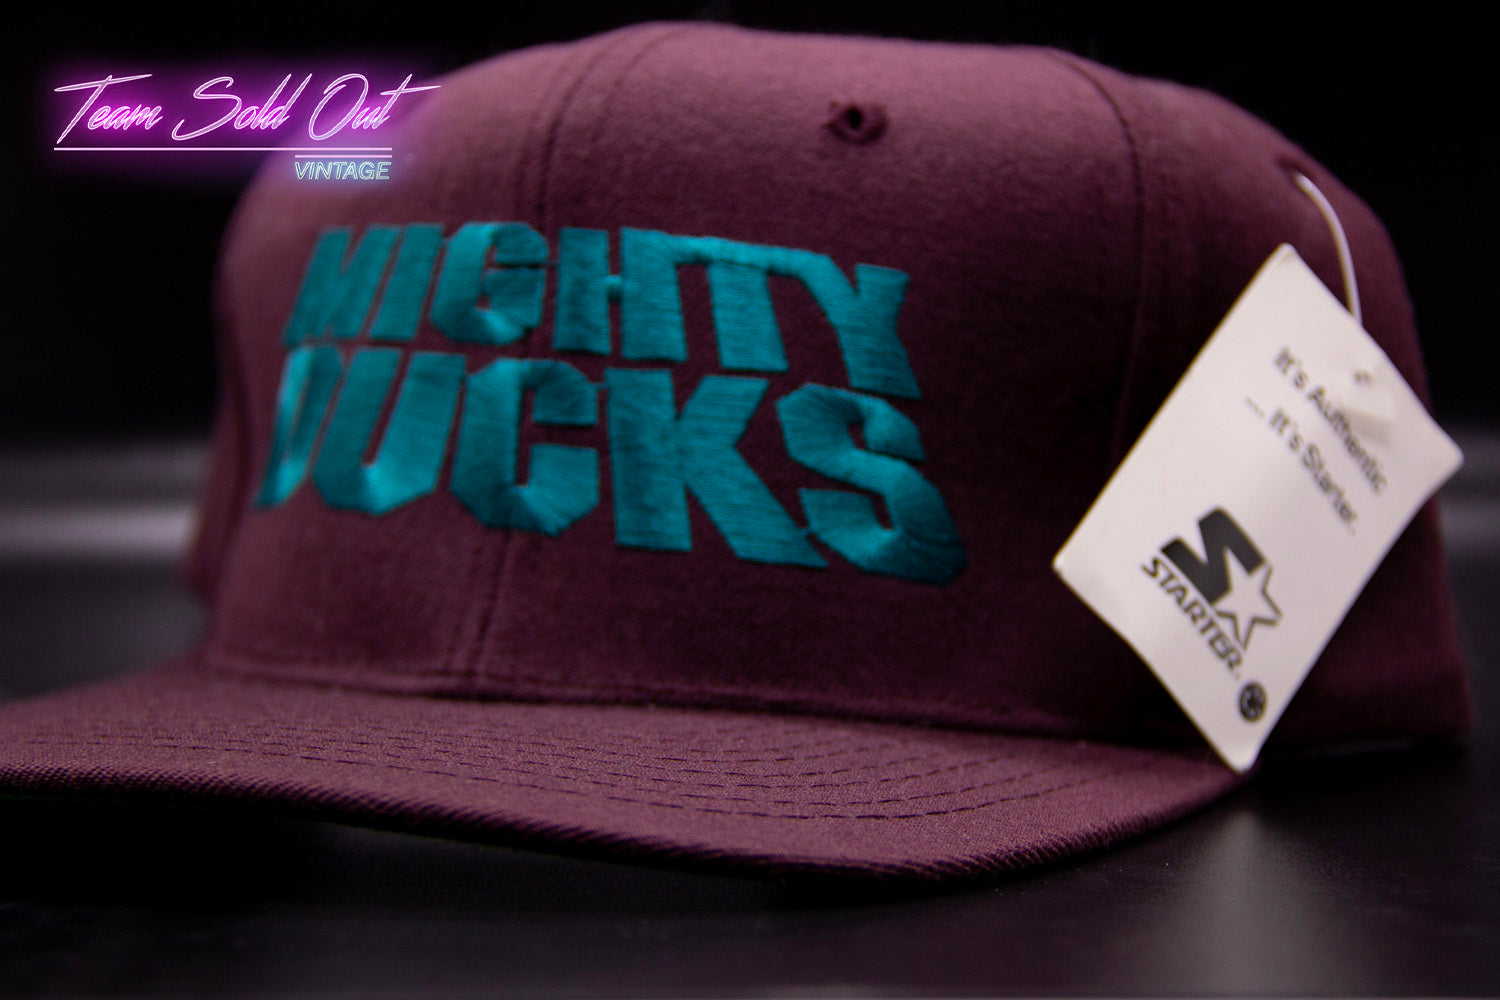 Vintage The Game Anaheim Mighty Ducks Snapback Cap Hat